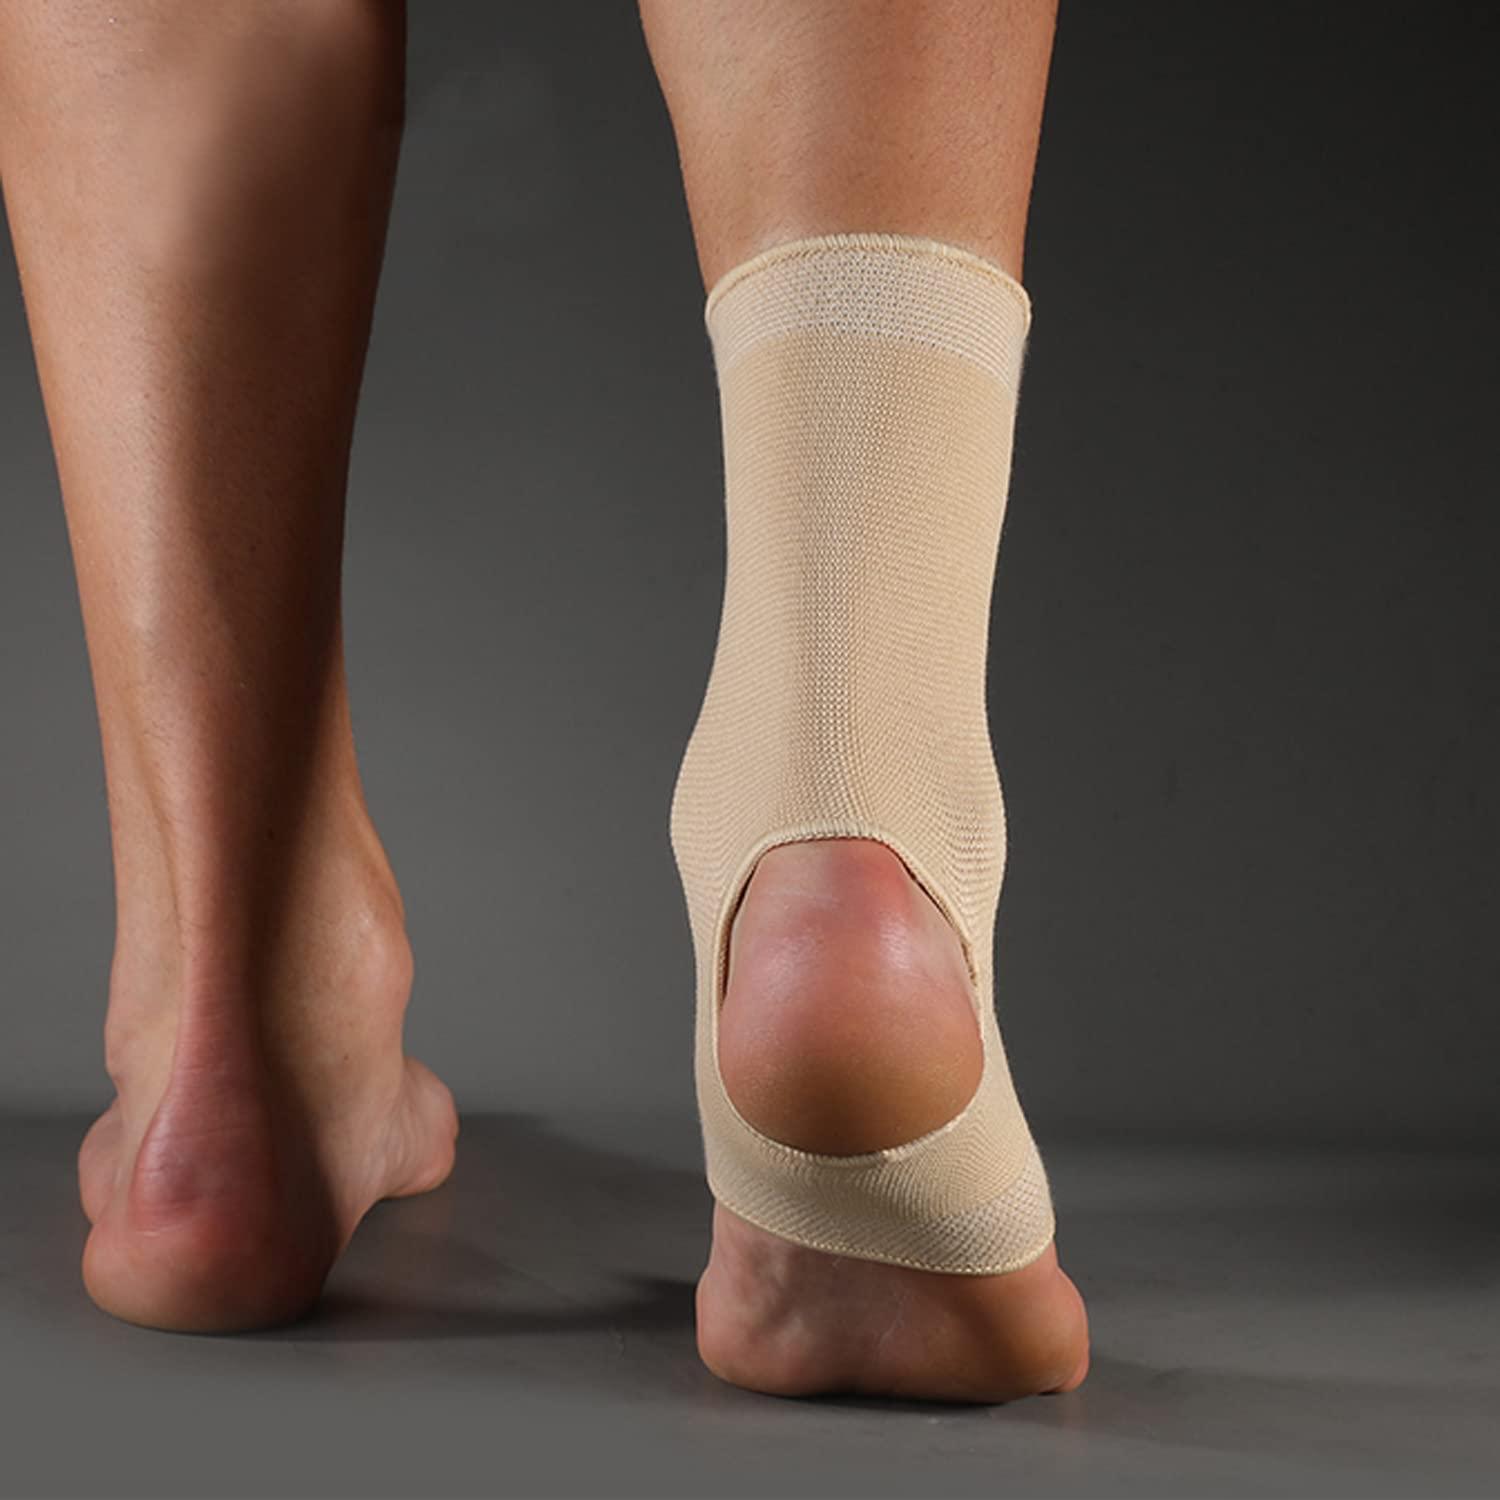 SPOTBRACE Ankle Brace Compression Sleeve(2 PACK),Breathable Ankle Support  For Men Women, Ankle Compression Sock